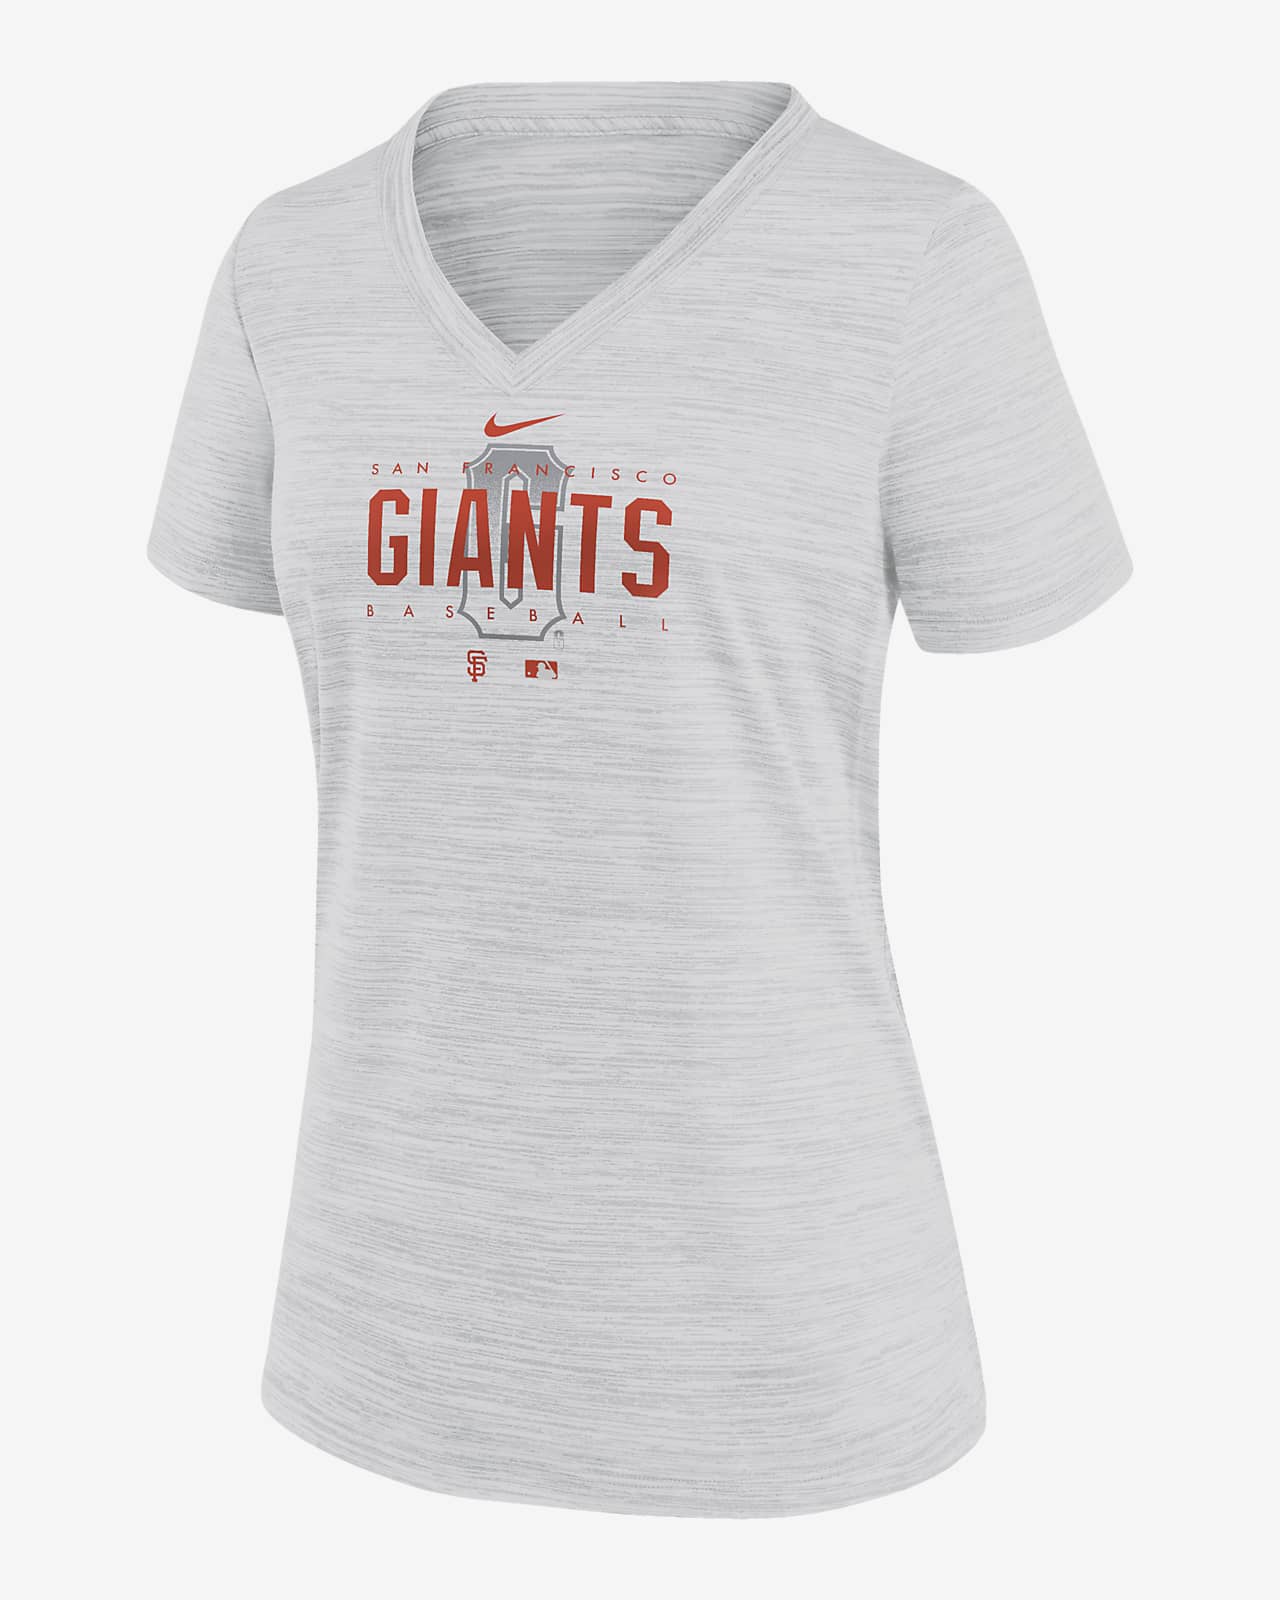 Nike Dri-FIT City Connect Velocity Practice (MLB San Francisco Giants) Women's V-Neck T-Shirt